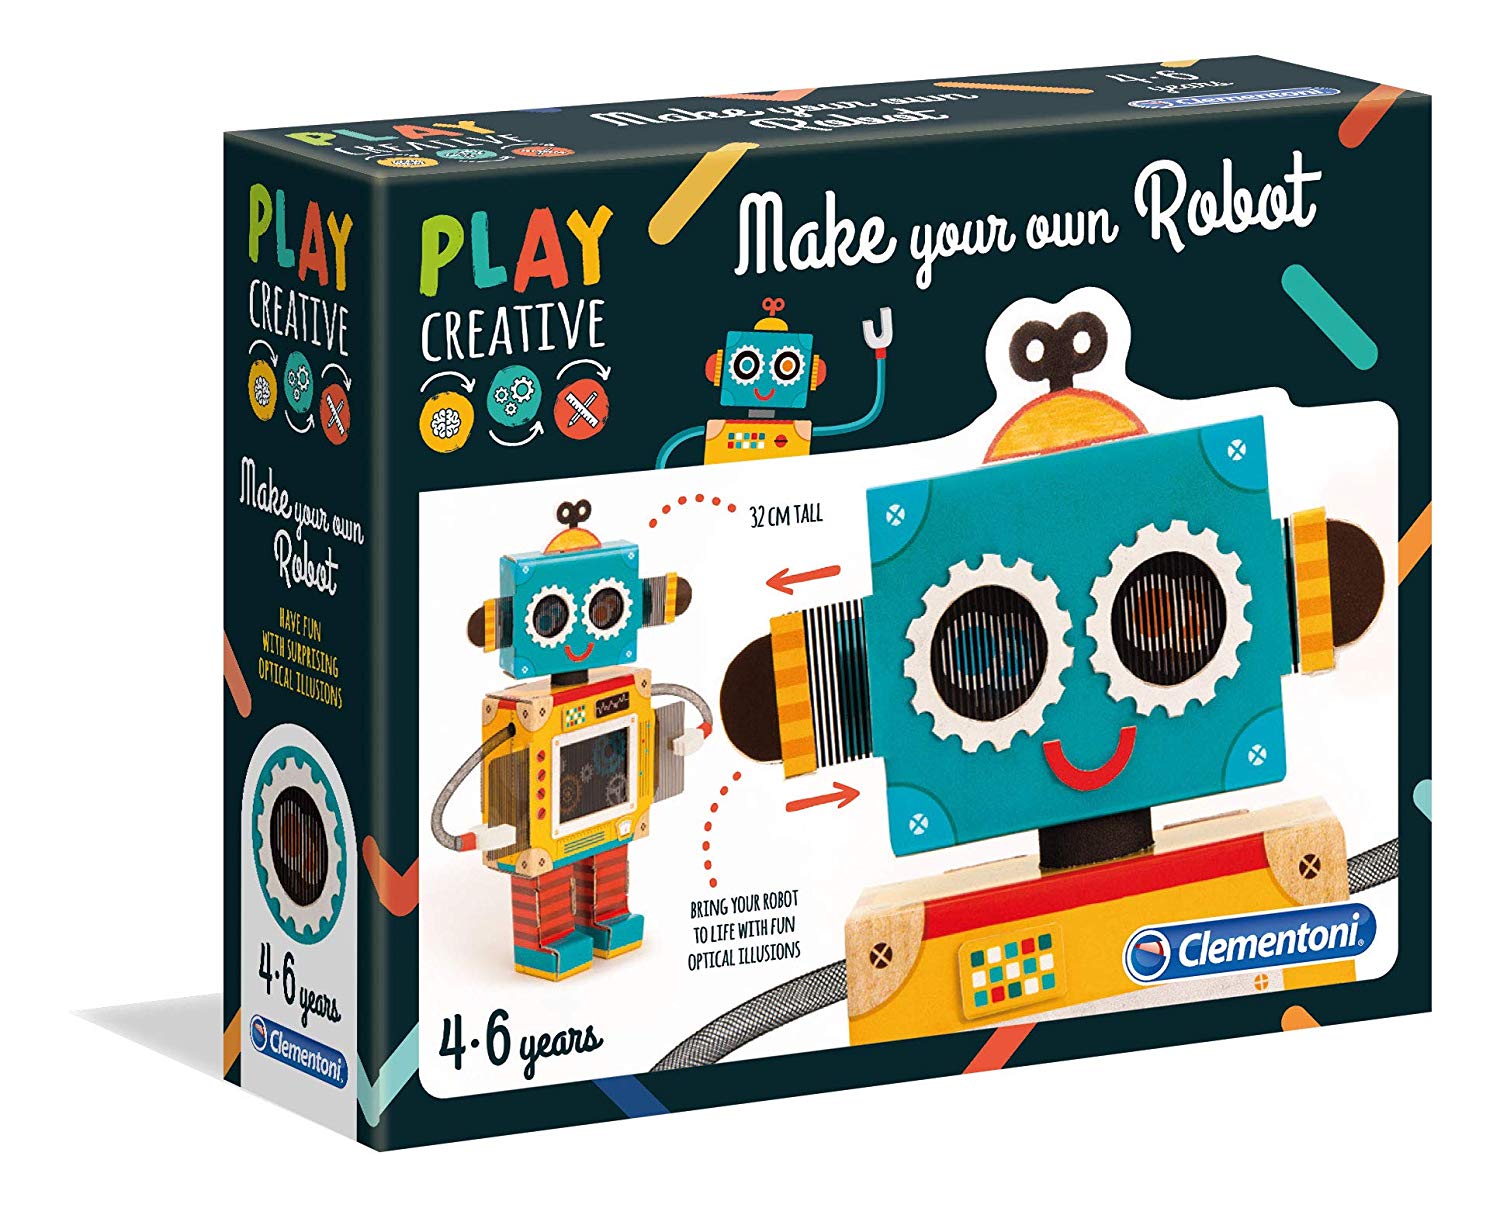 Clementoni Play Creative Shape Your Own Robot Multicolour